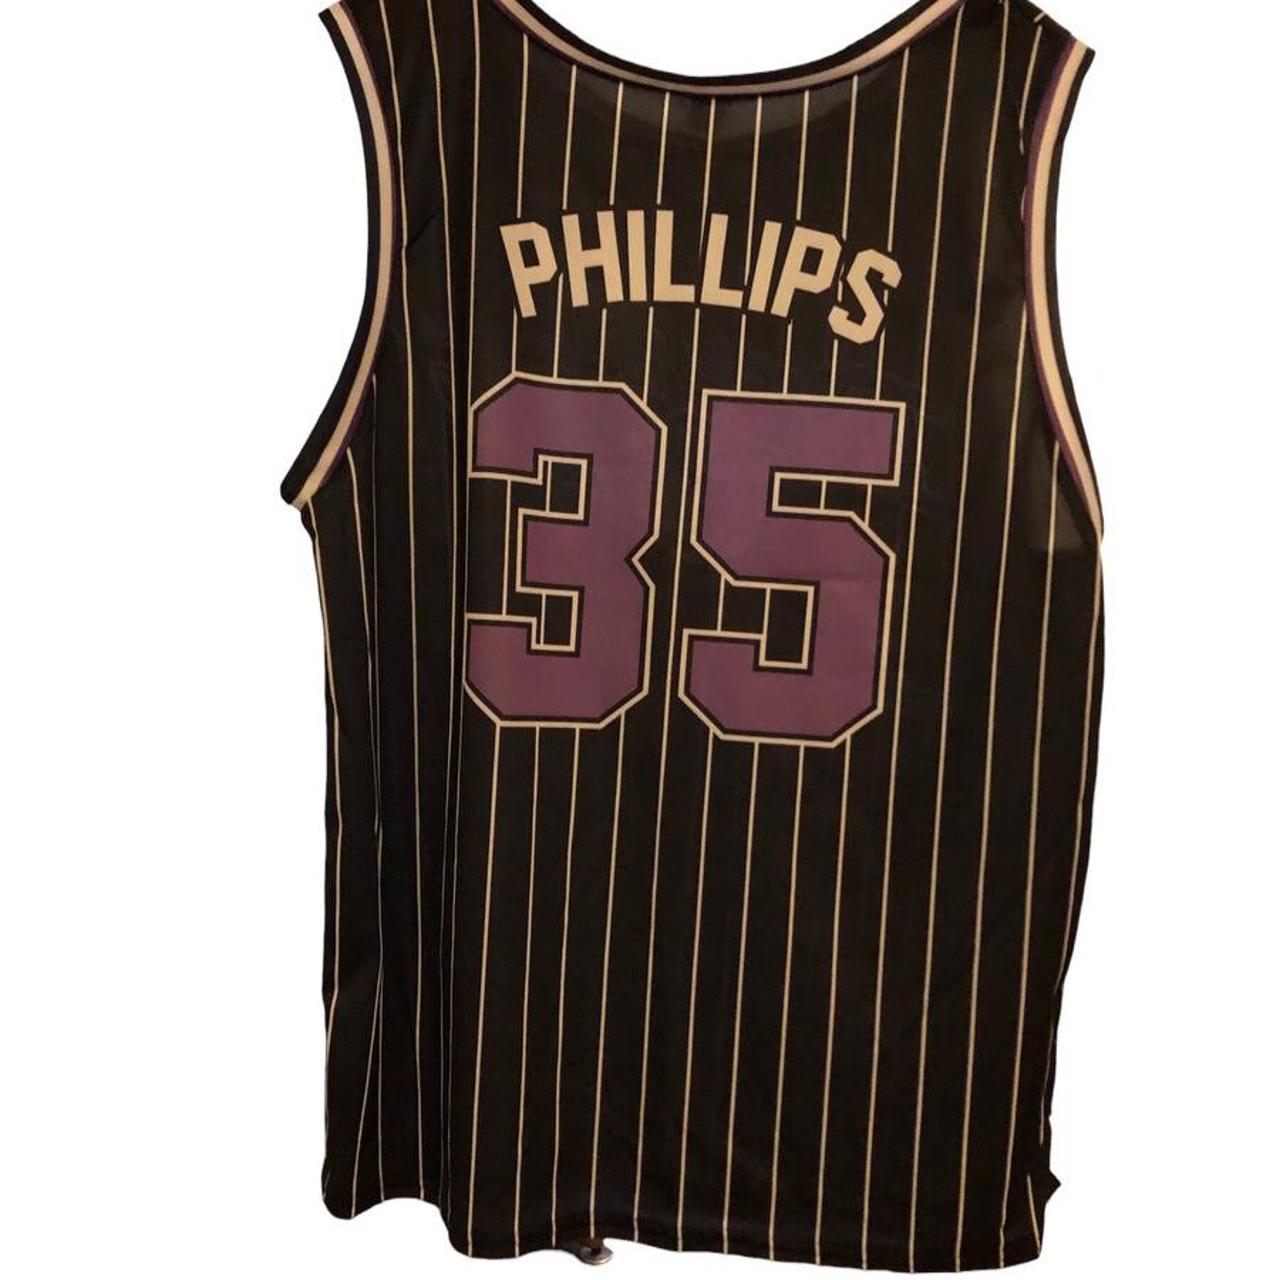 Tampa Bay Rays Brett Phillips Basketball Jersey - Depop